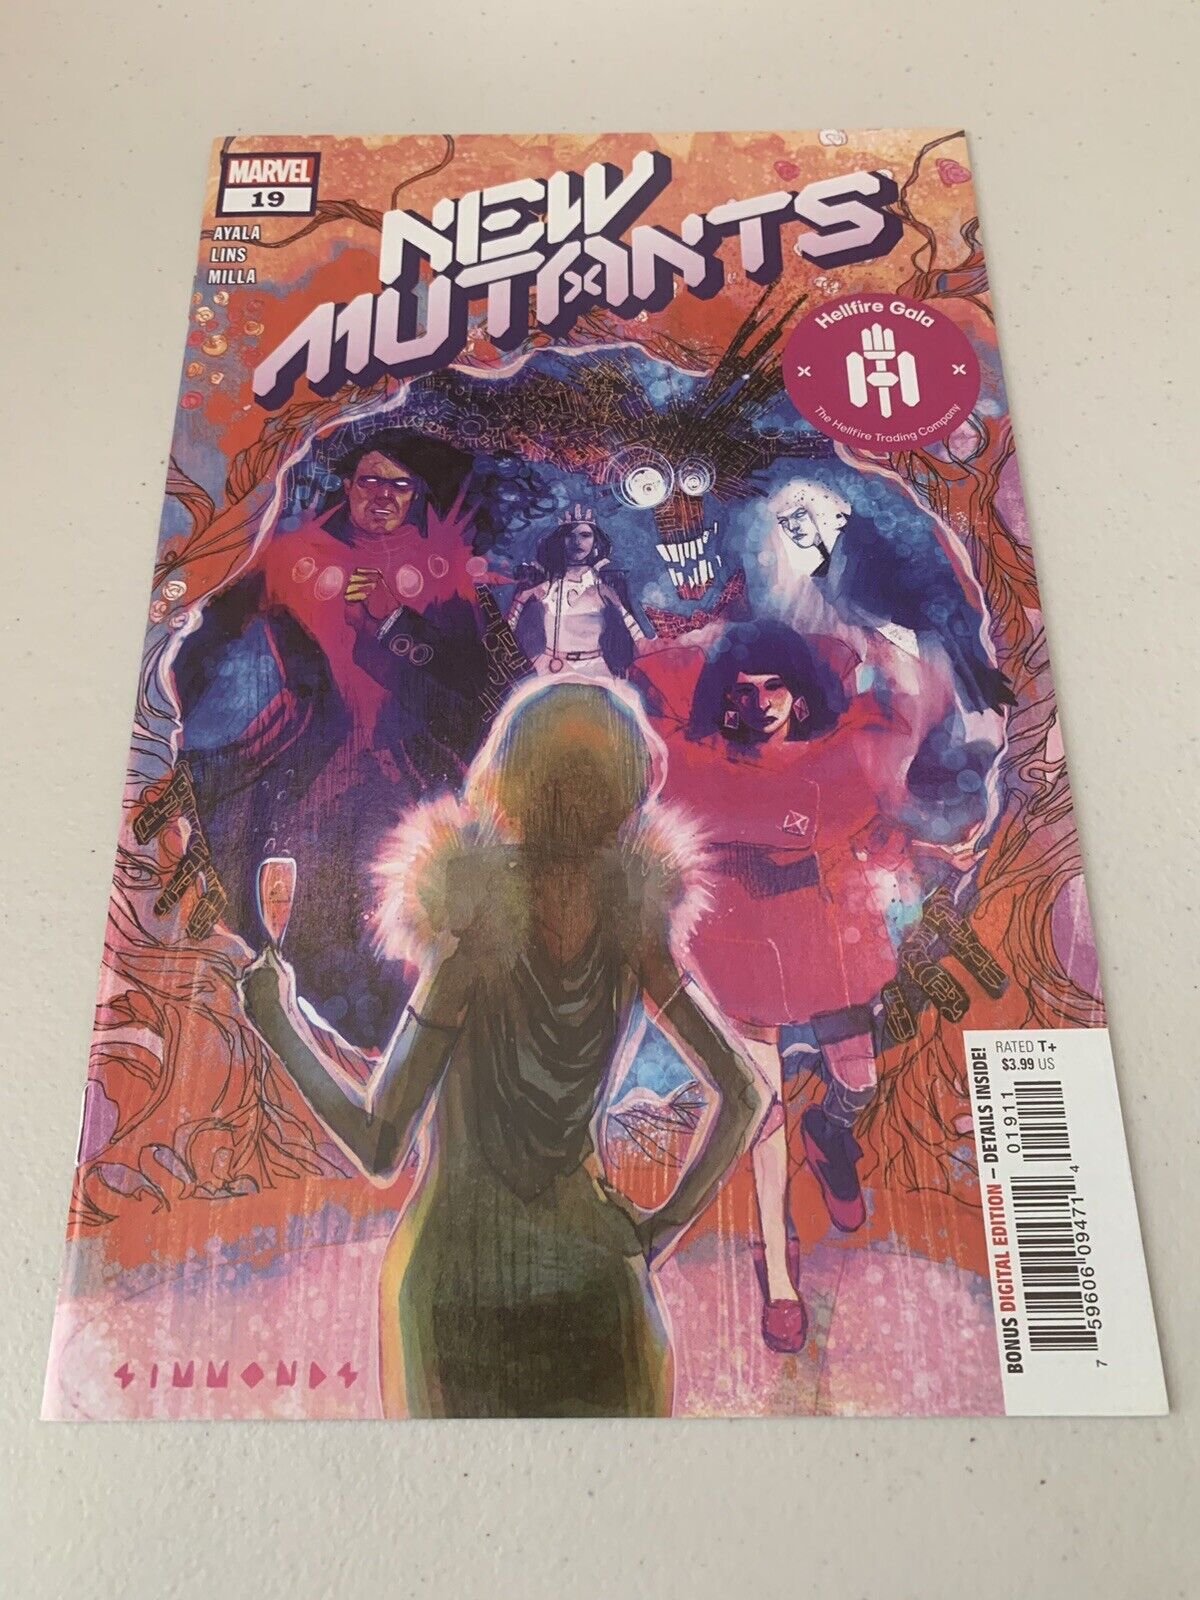 New Mutants #19 (Aug 2021) Marvel Comics